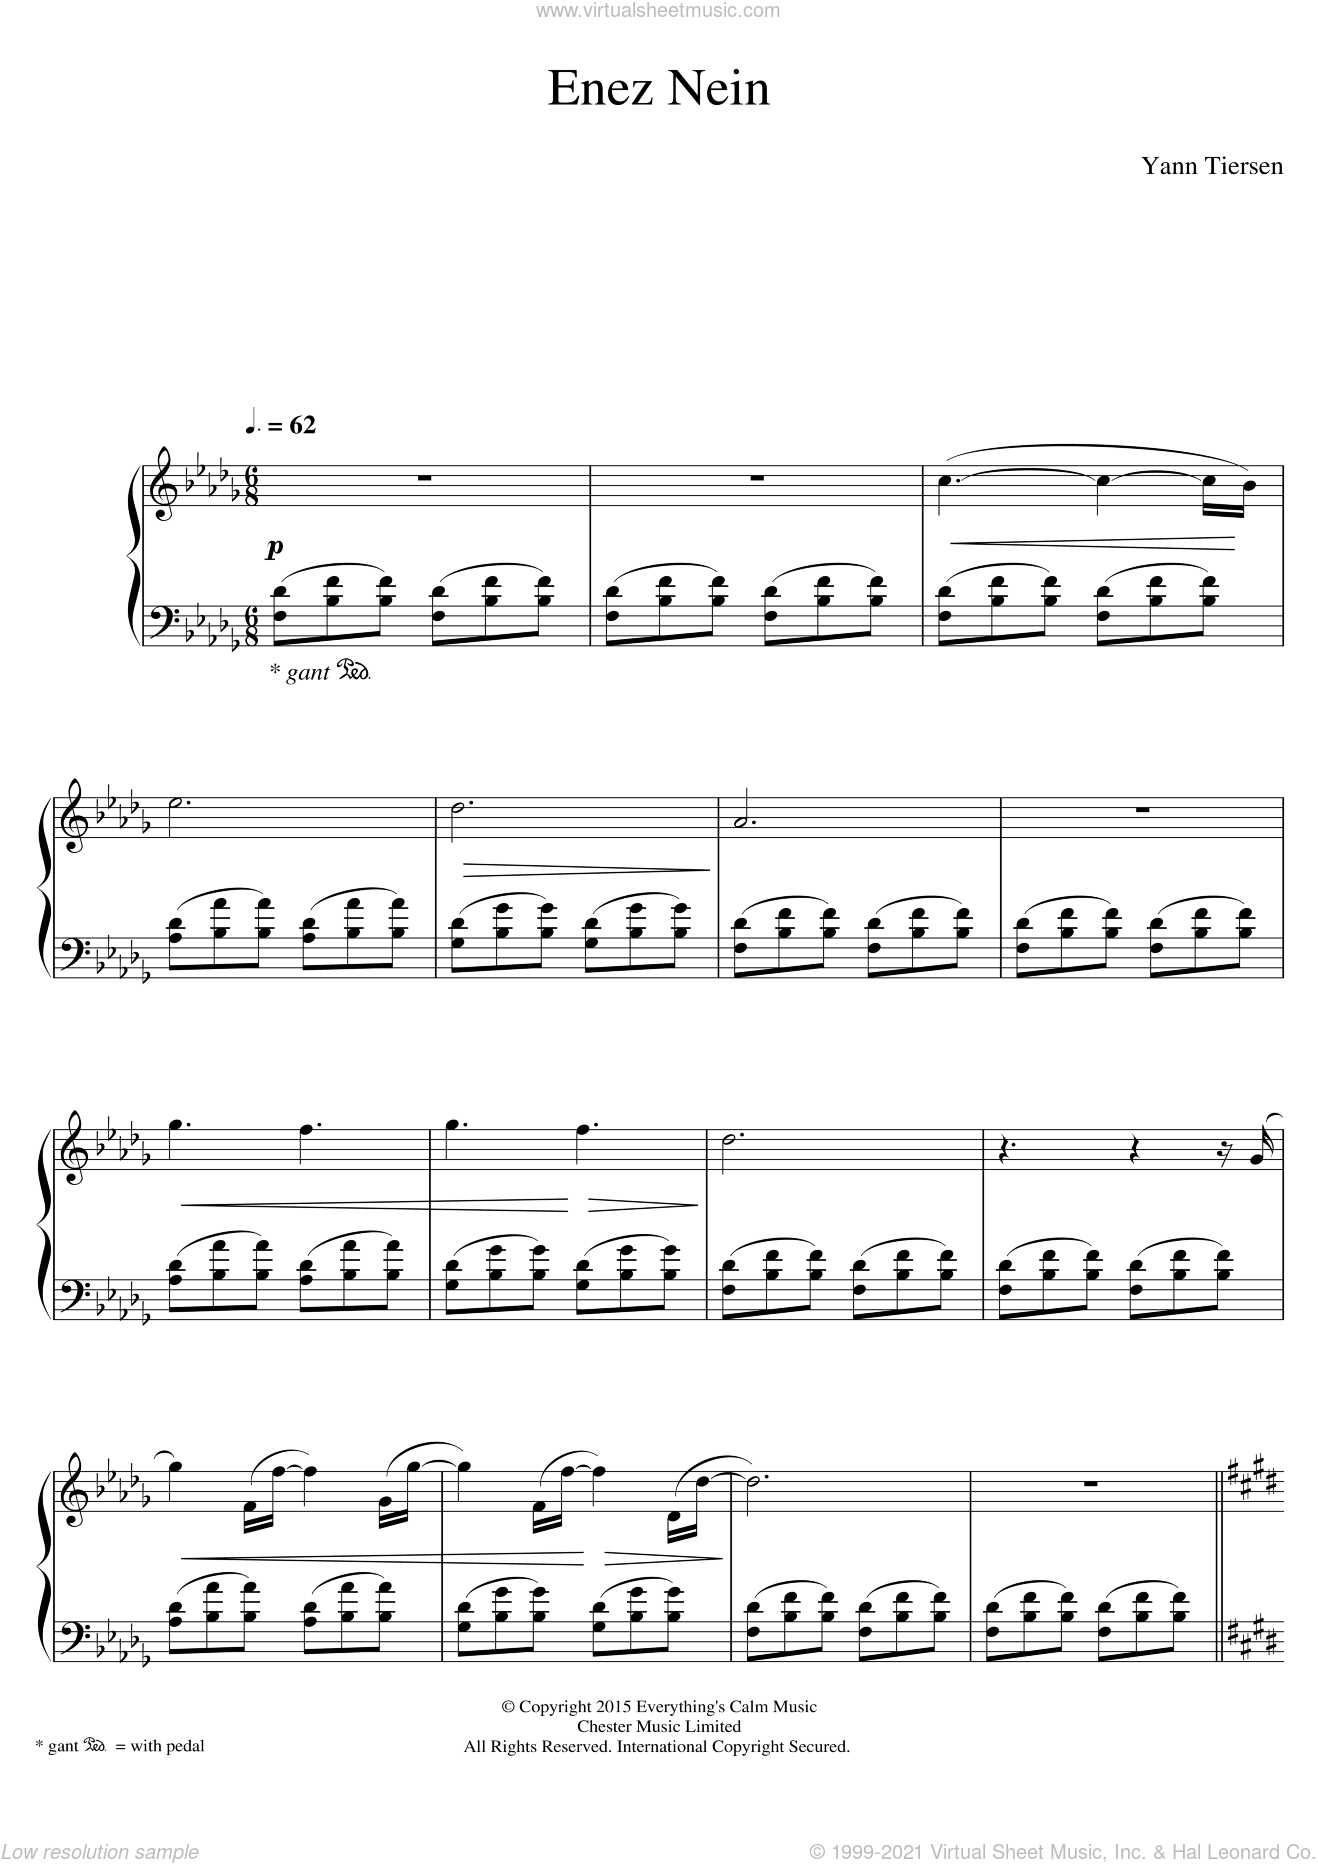 Tiersen Enez Nein Sheet Music For Piano Solo Pdf Interactive Yann tiersen sheet music notes. tiersen enez nein sheet music for piano solo pdf interactive